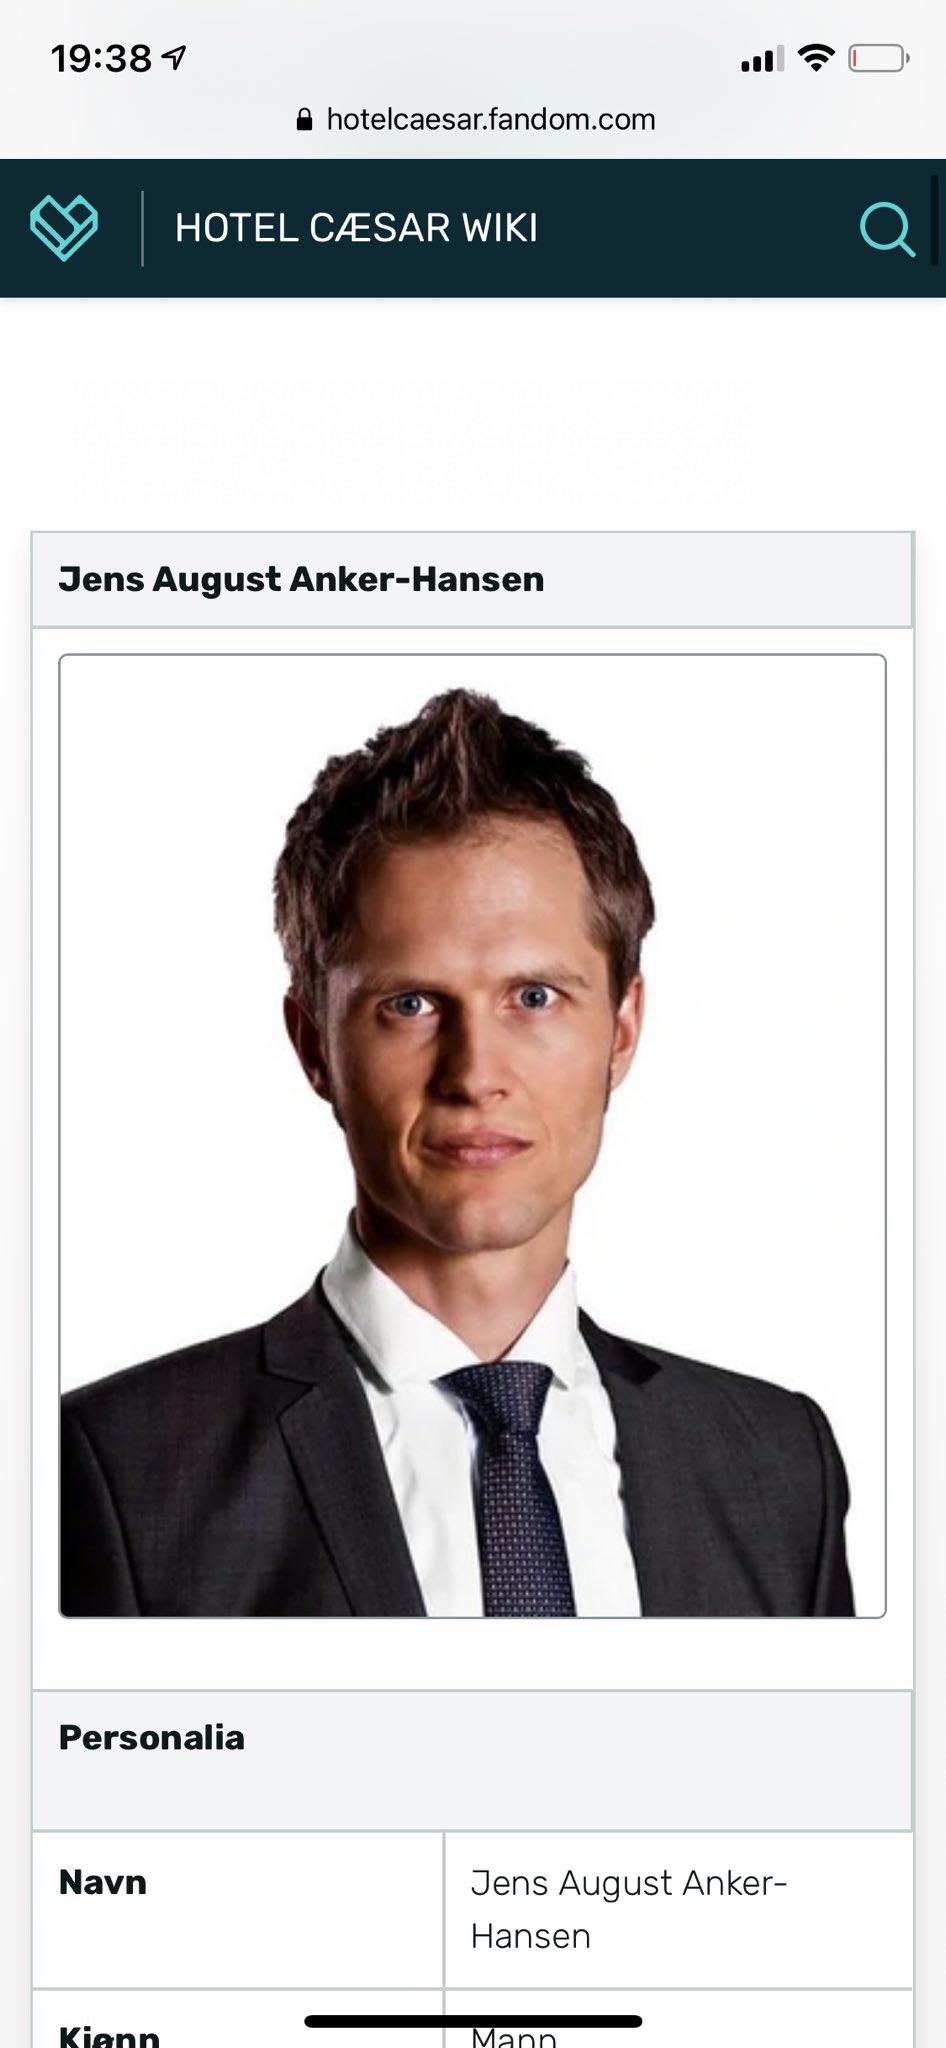 halv otte Mockingbird Mispend Lars Fossedal on Twitter: "@AugustJensen @ProCyclingStats Perhaps people  are looking for the world famous Jens August Anker-Hansen from Hotel Cæsar?  https://t.co/sFwcmq0apa" / Twitter